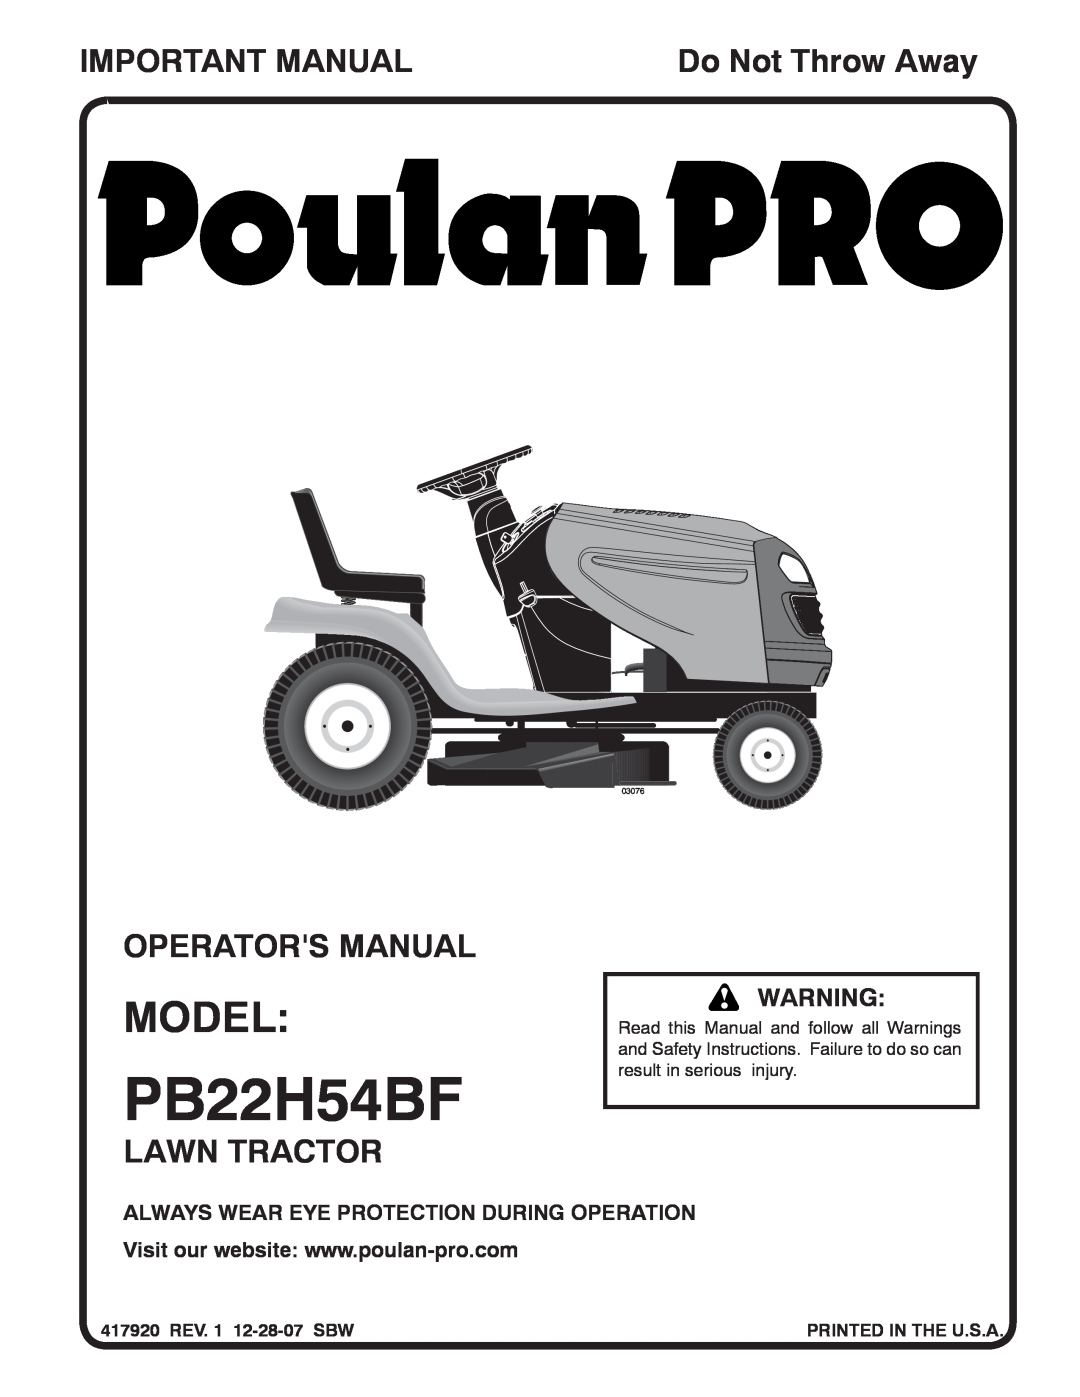 Poulan PB22H54BF manual Model, Important Manual, Operators Manual, Lawn Tractor, Do Not Throw Away, 03076 